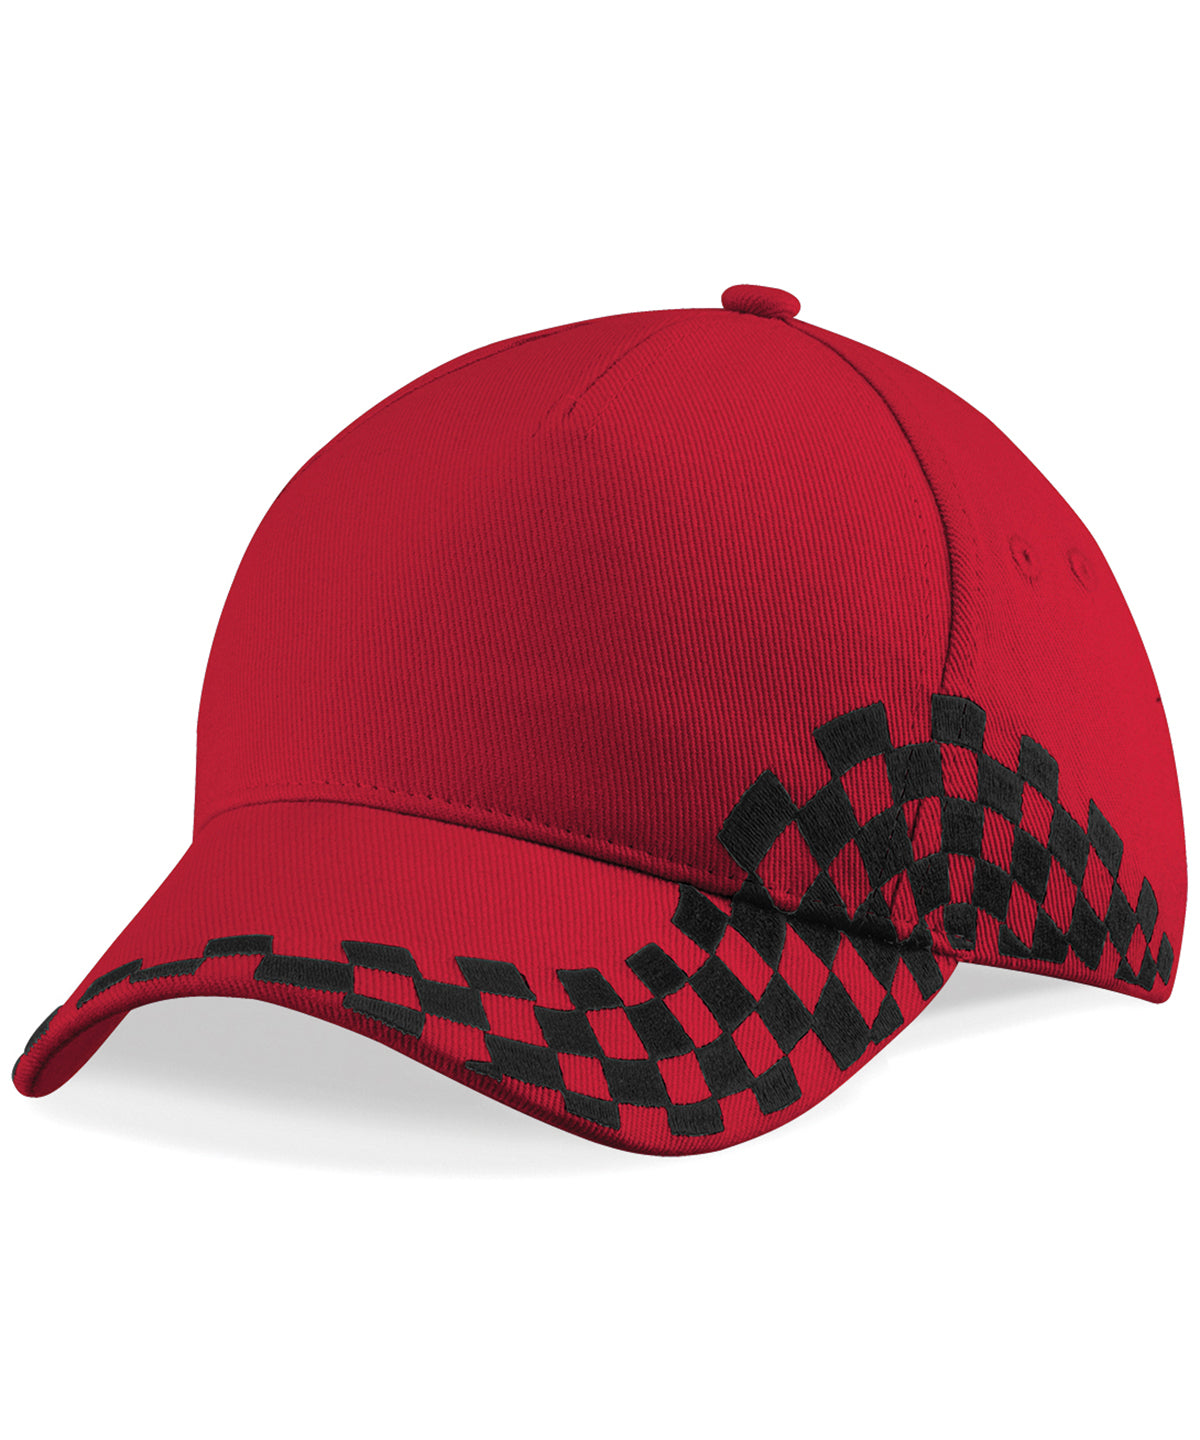 Personalised Caps - Mid Red Beechfield Grand Prix cap